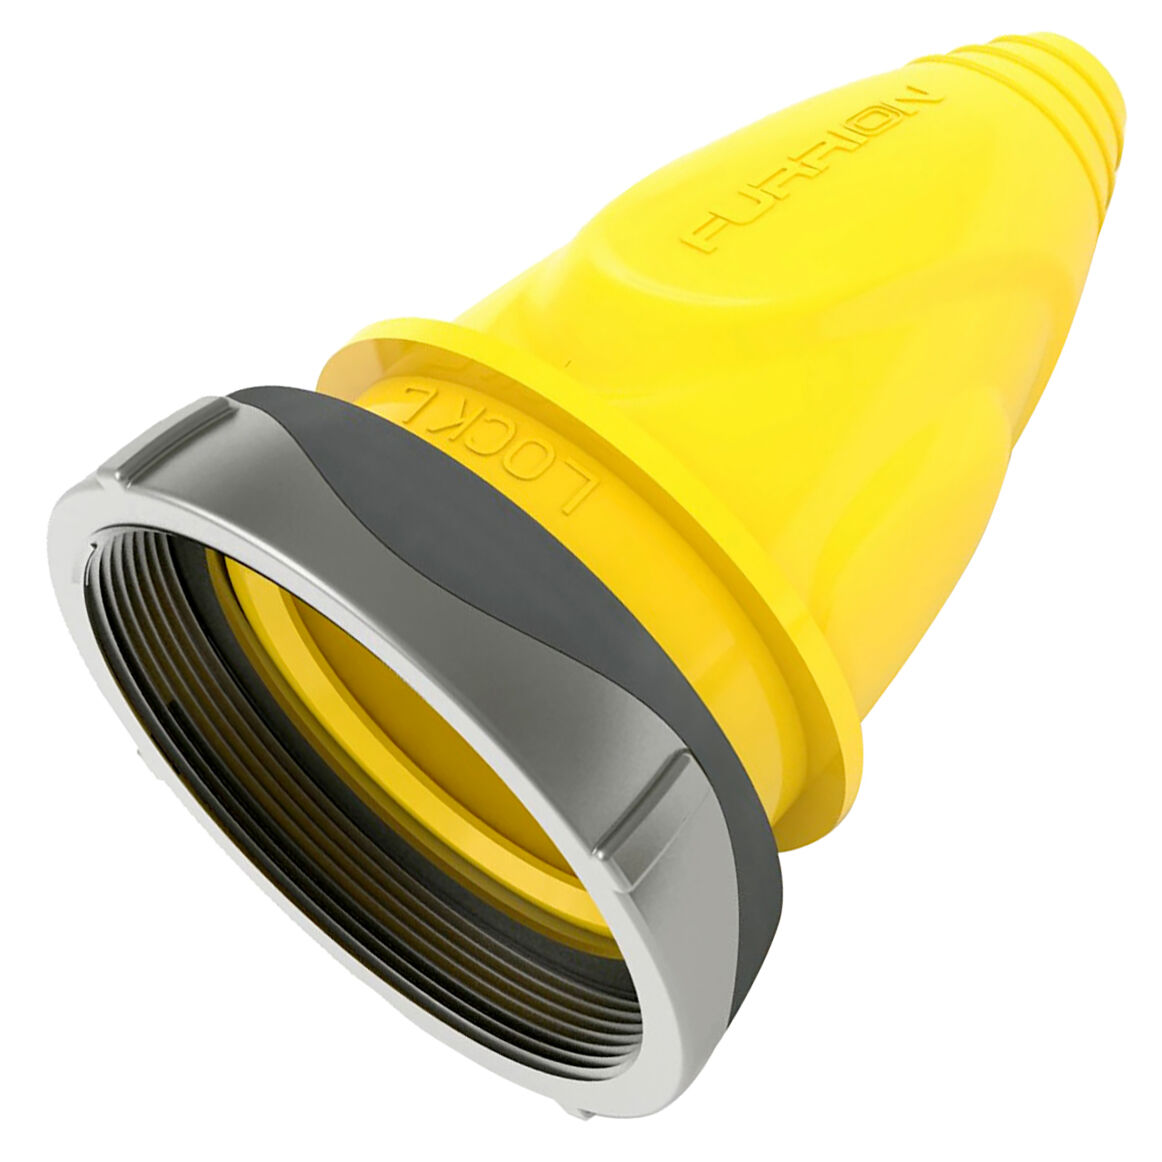 Furrion F30COV-SY Yellow 30 Amp Male Plug Cover 